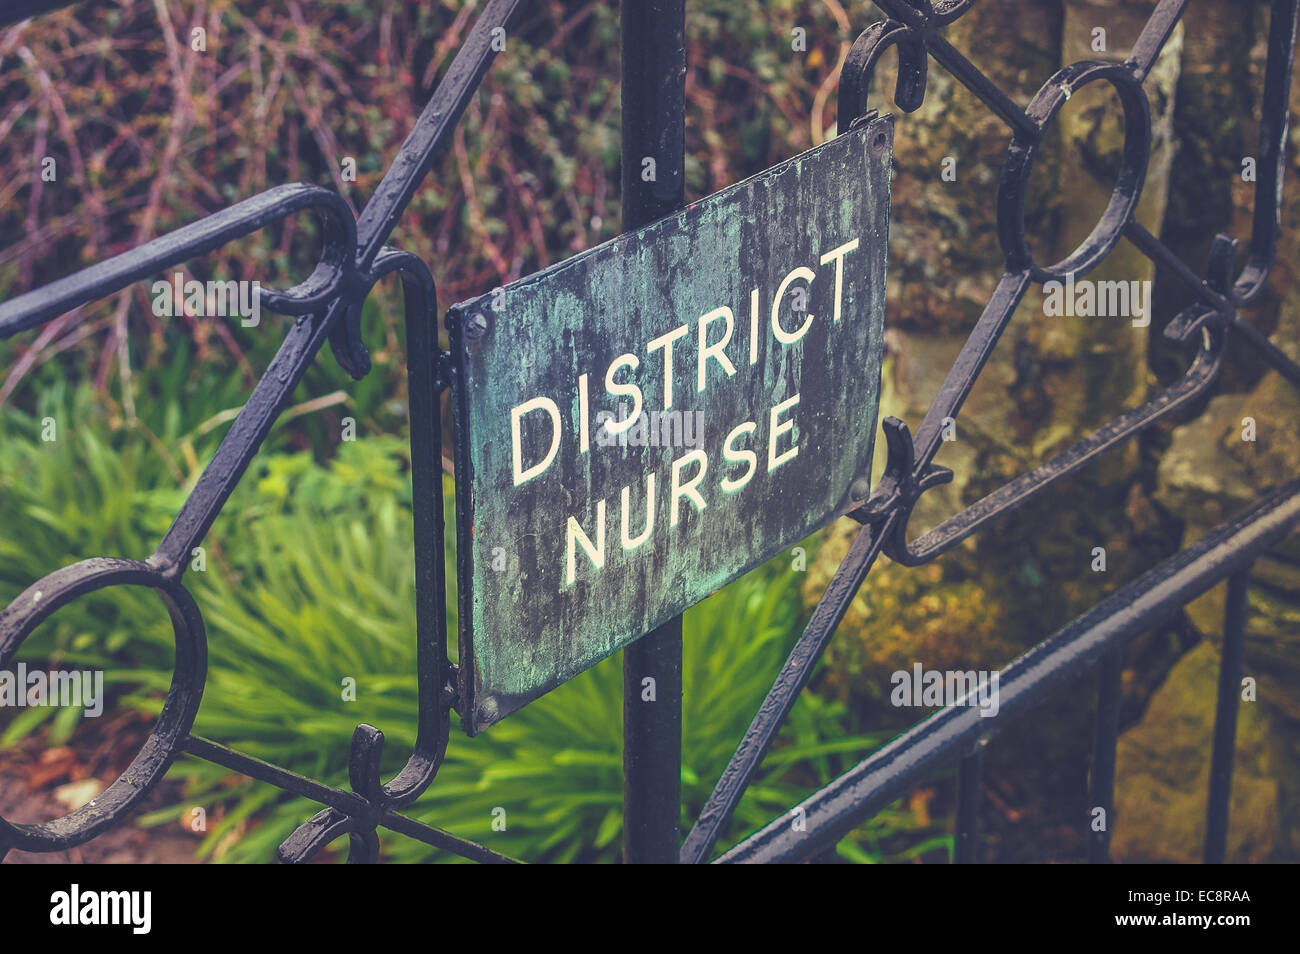 District Nurse Sign On A Garden Gate Stock Photo